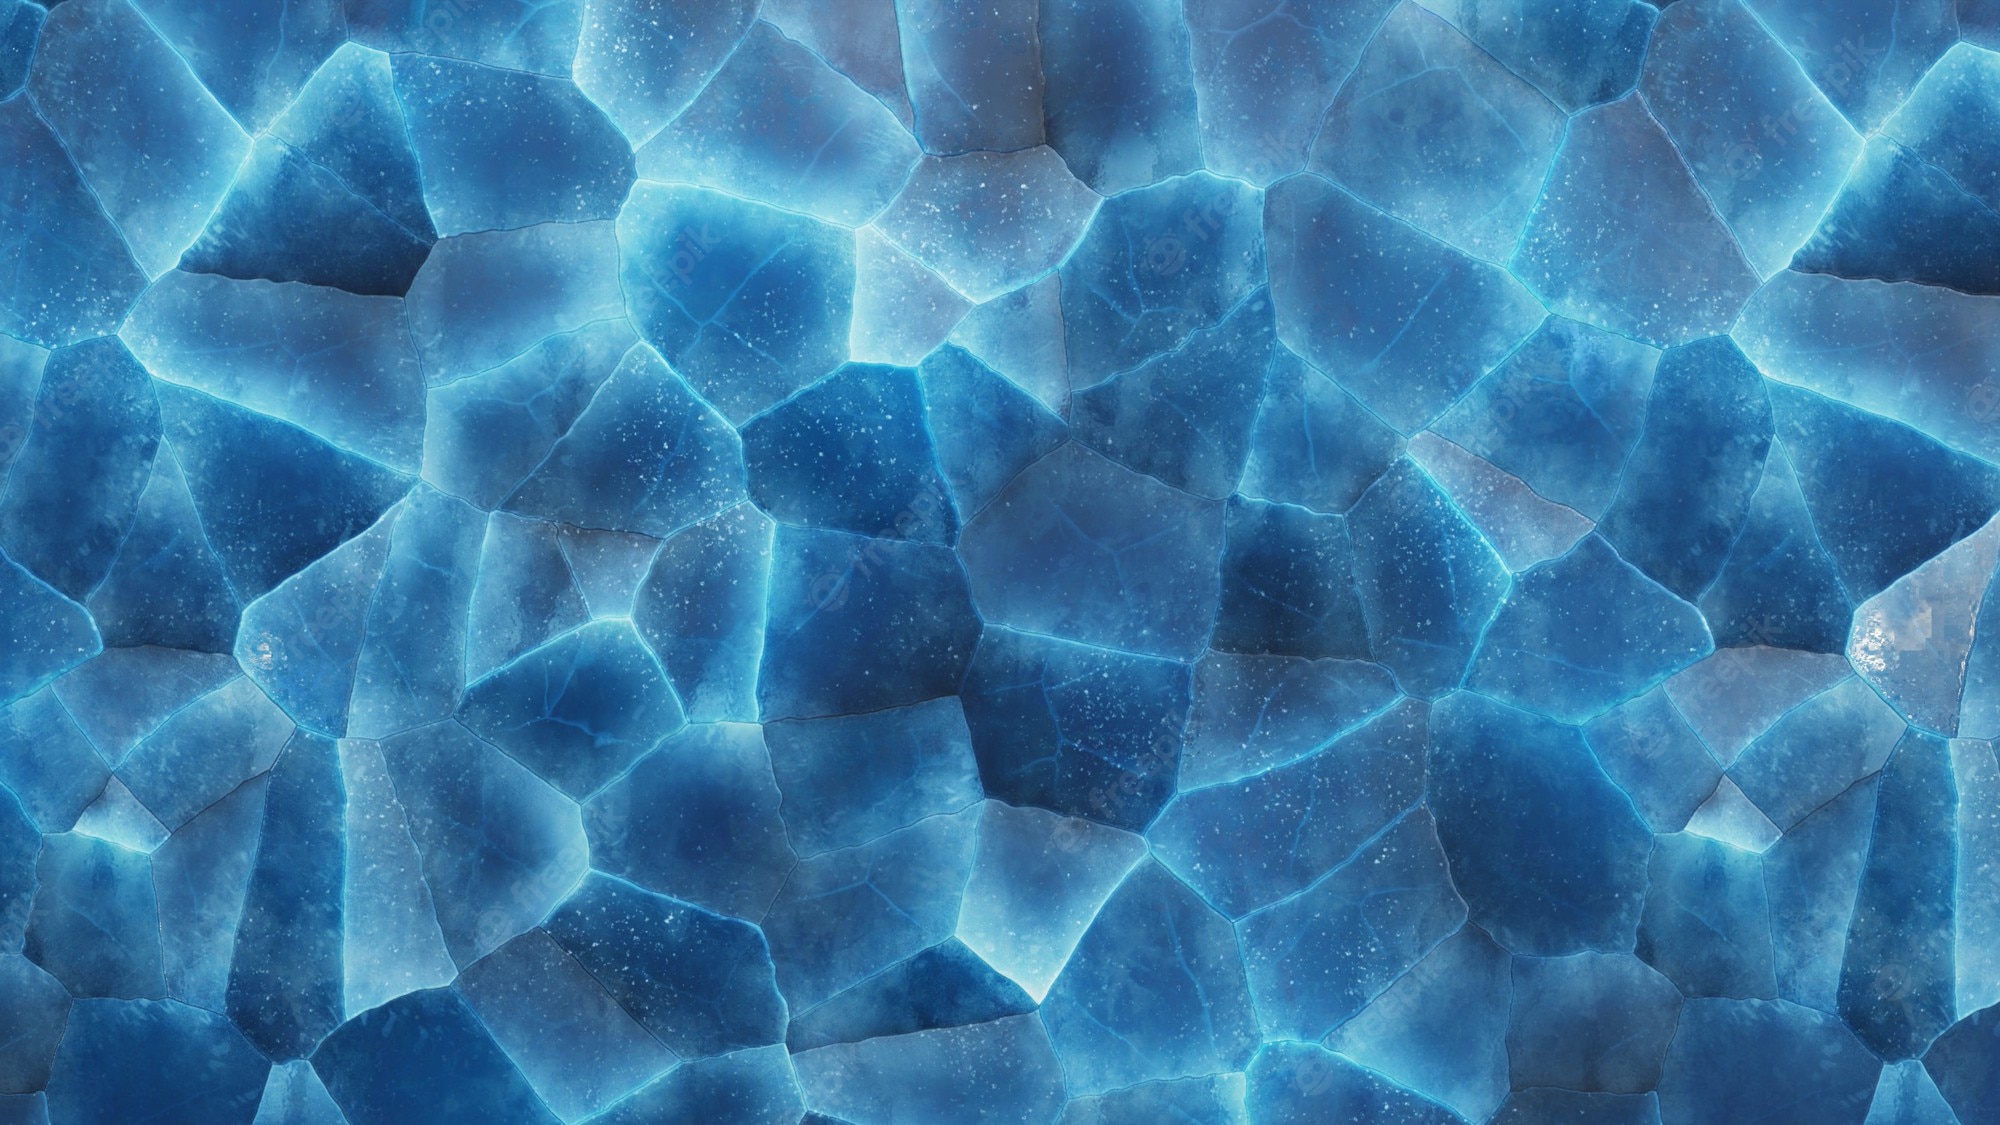 Premium Photok high resolution stylized broken ice texture wallpaper background realistic 3D rendering 099